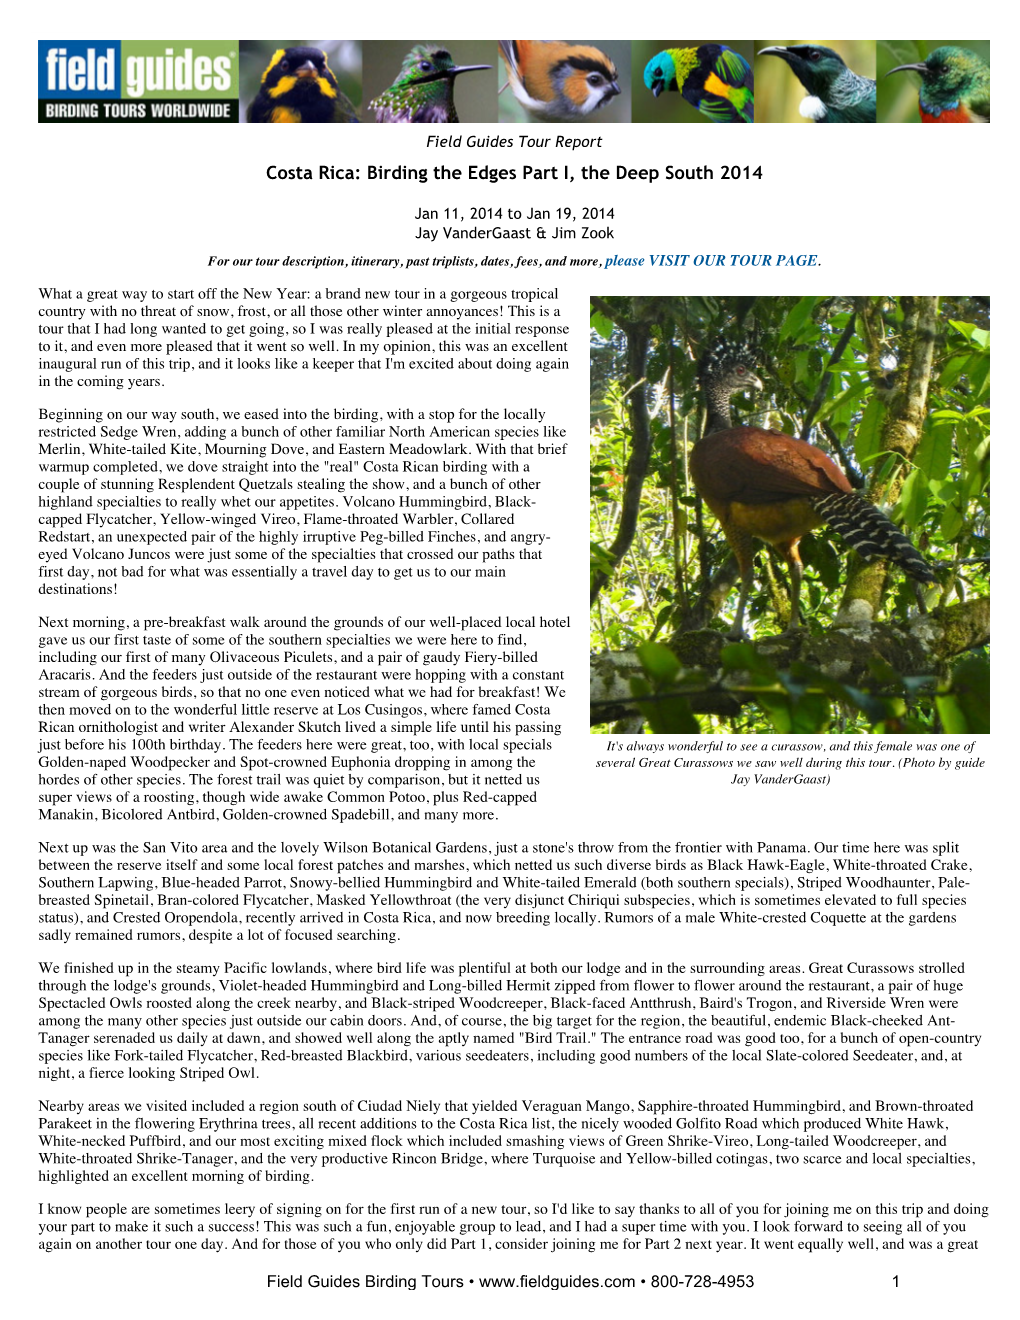 FIELD GUIDES BIRDING TOURS: Costa Rica: Birding the Edges